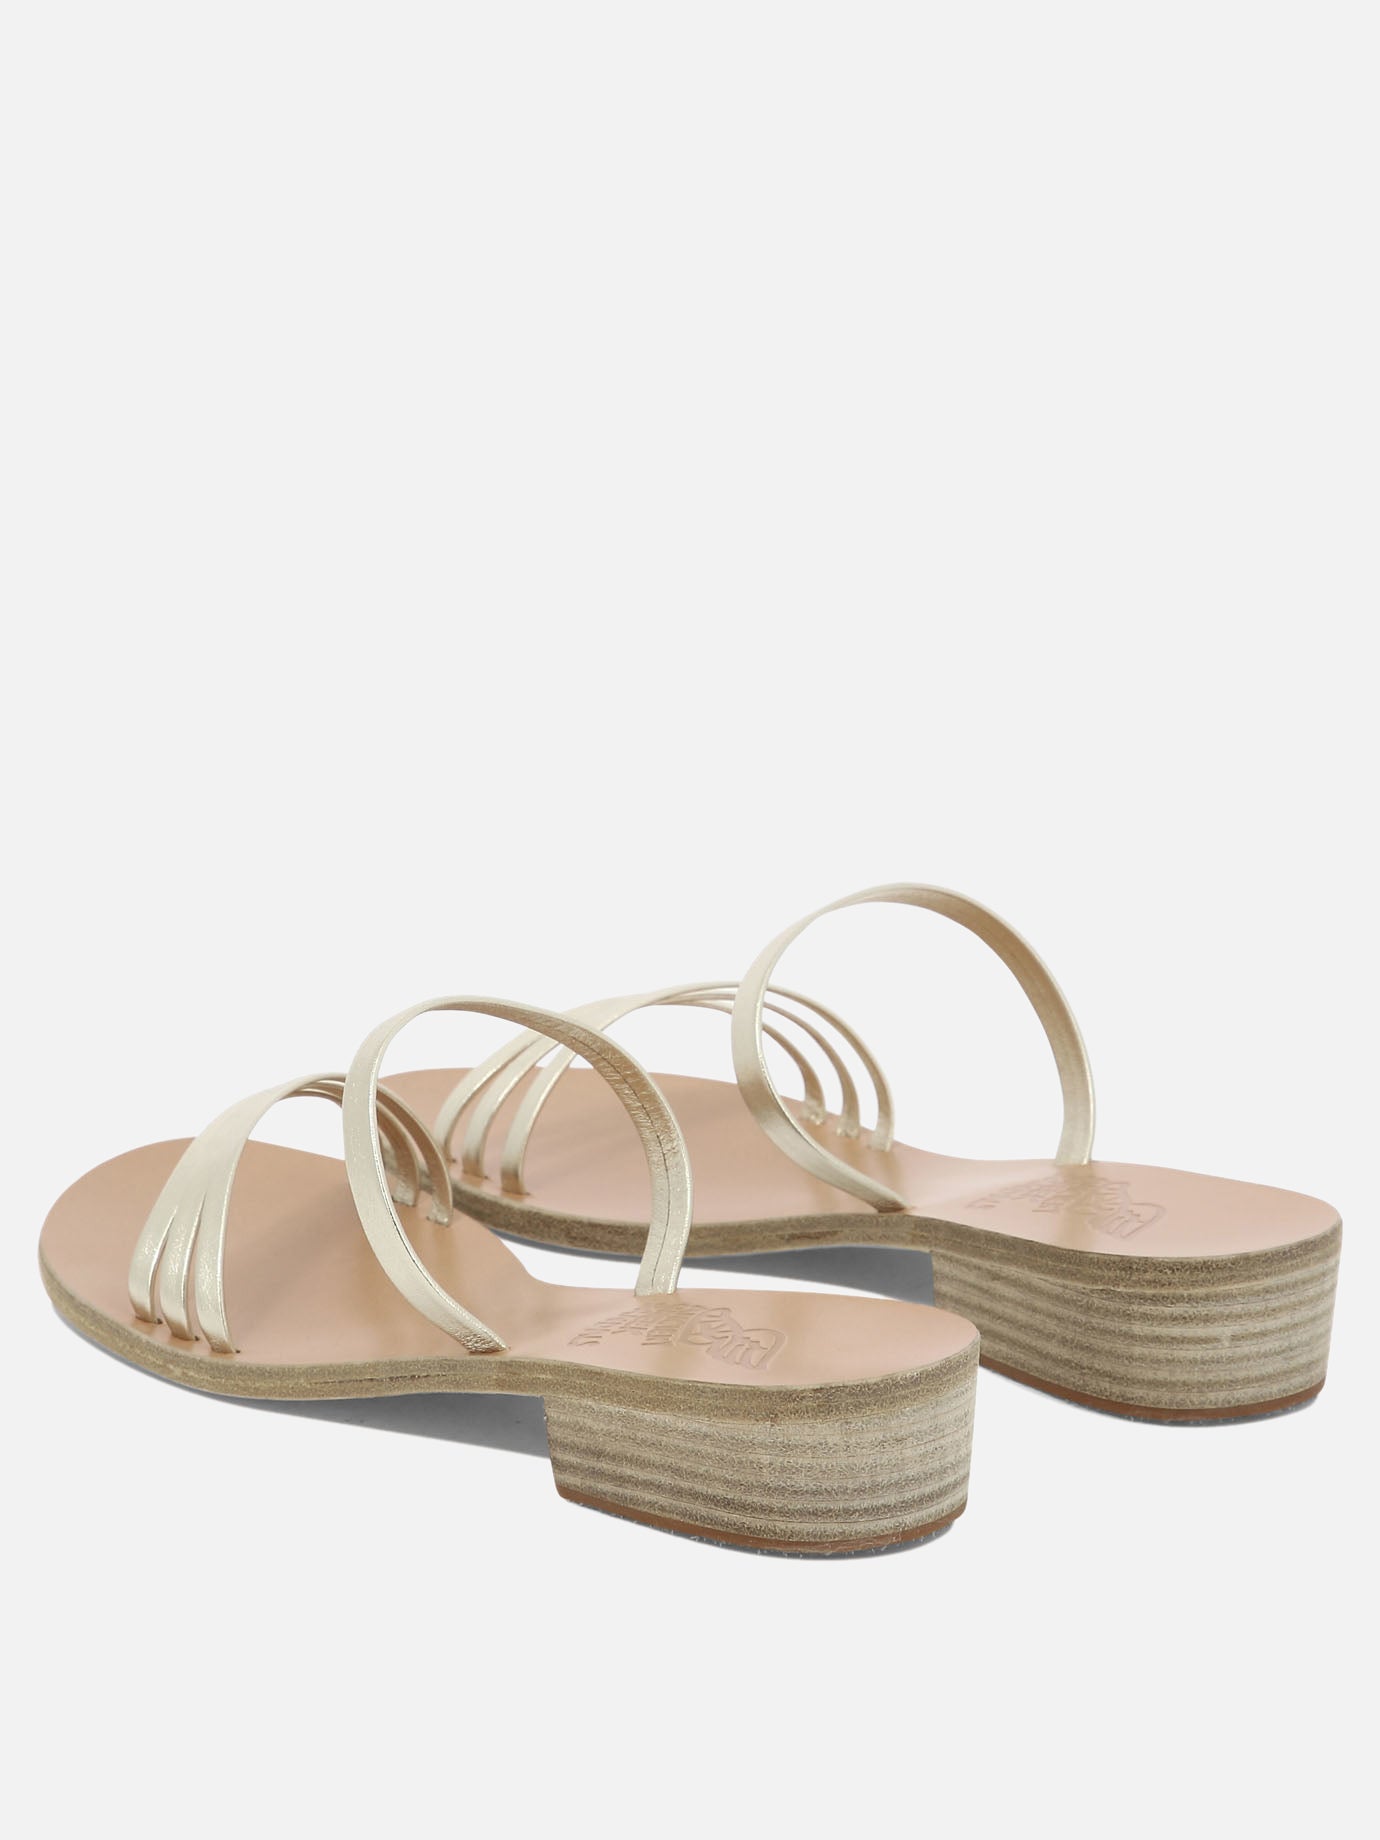 "Siopi Heel" sandals